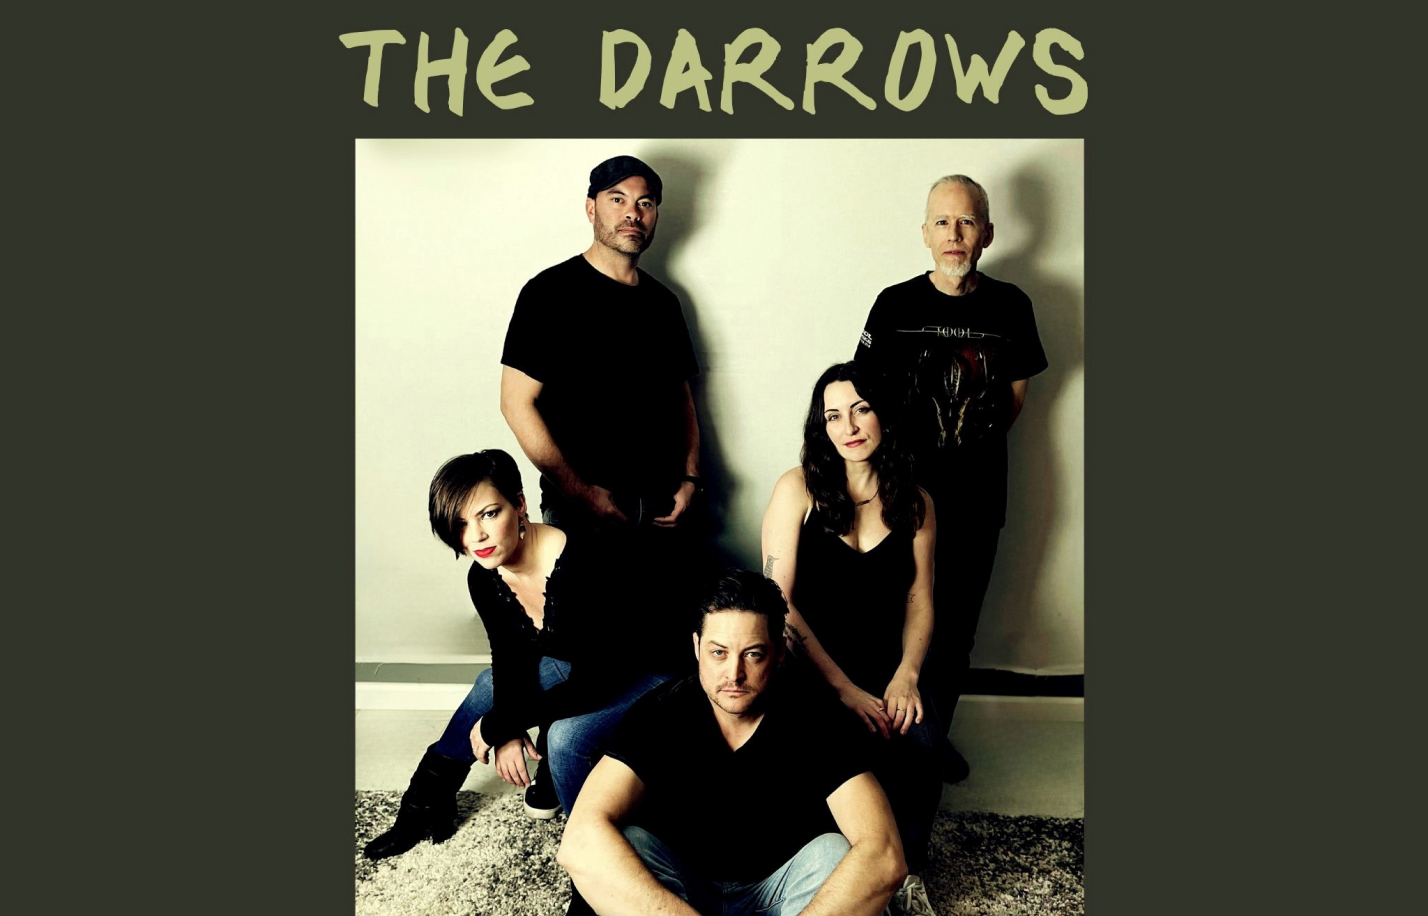 The Darrows band